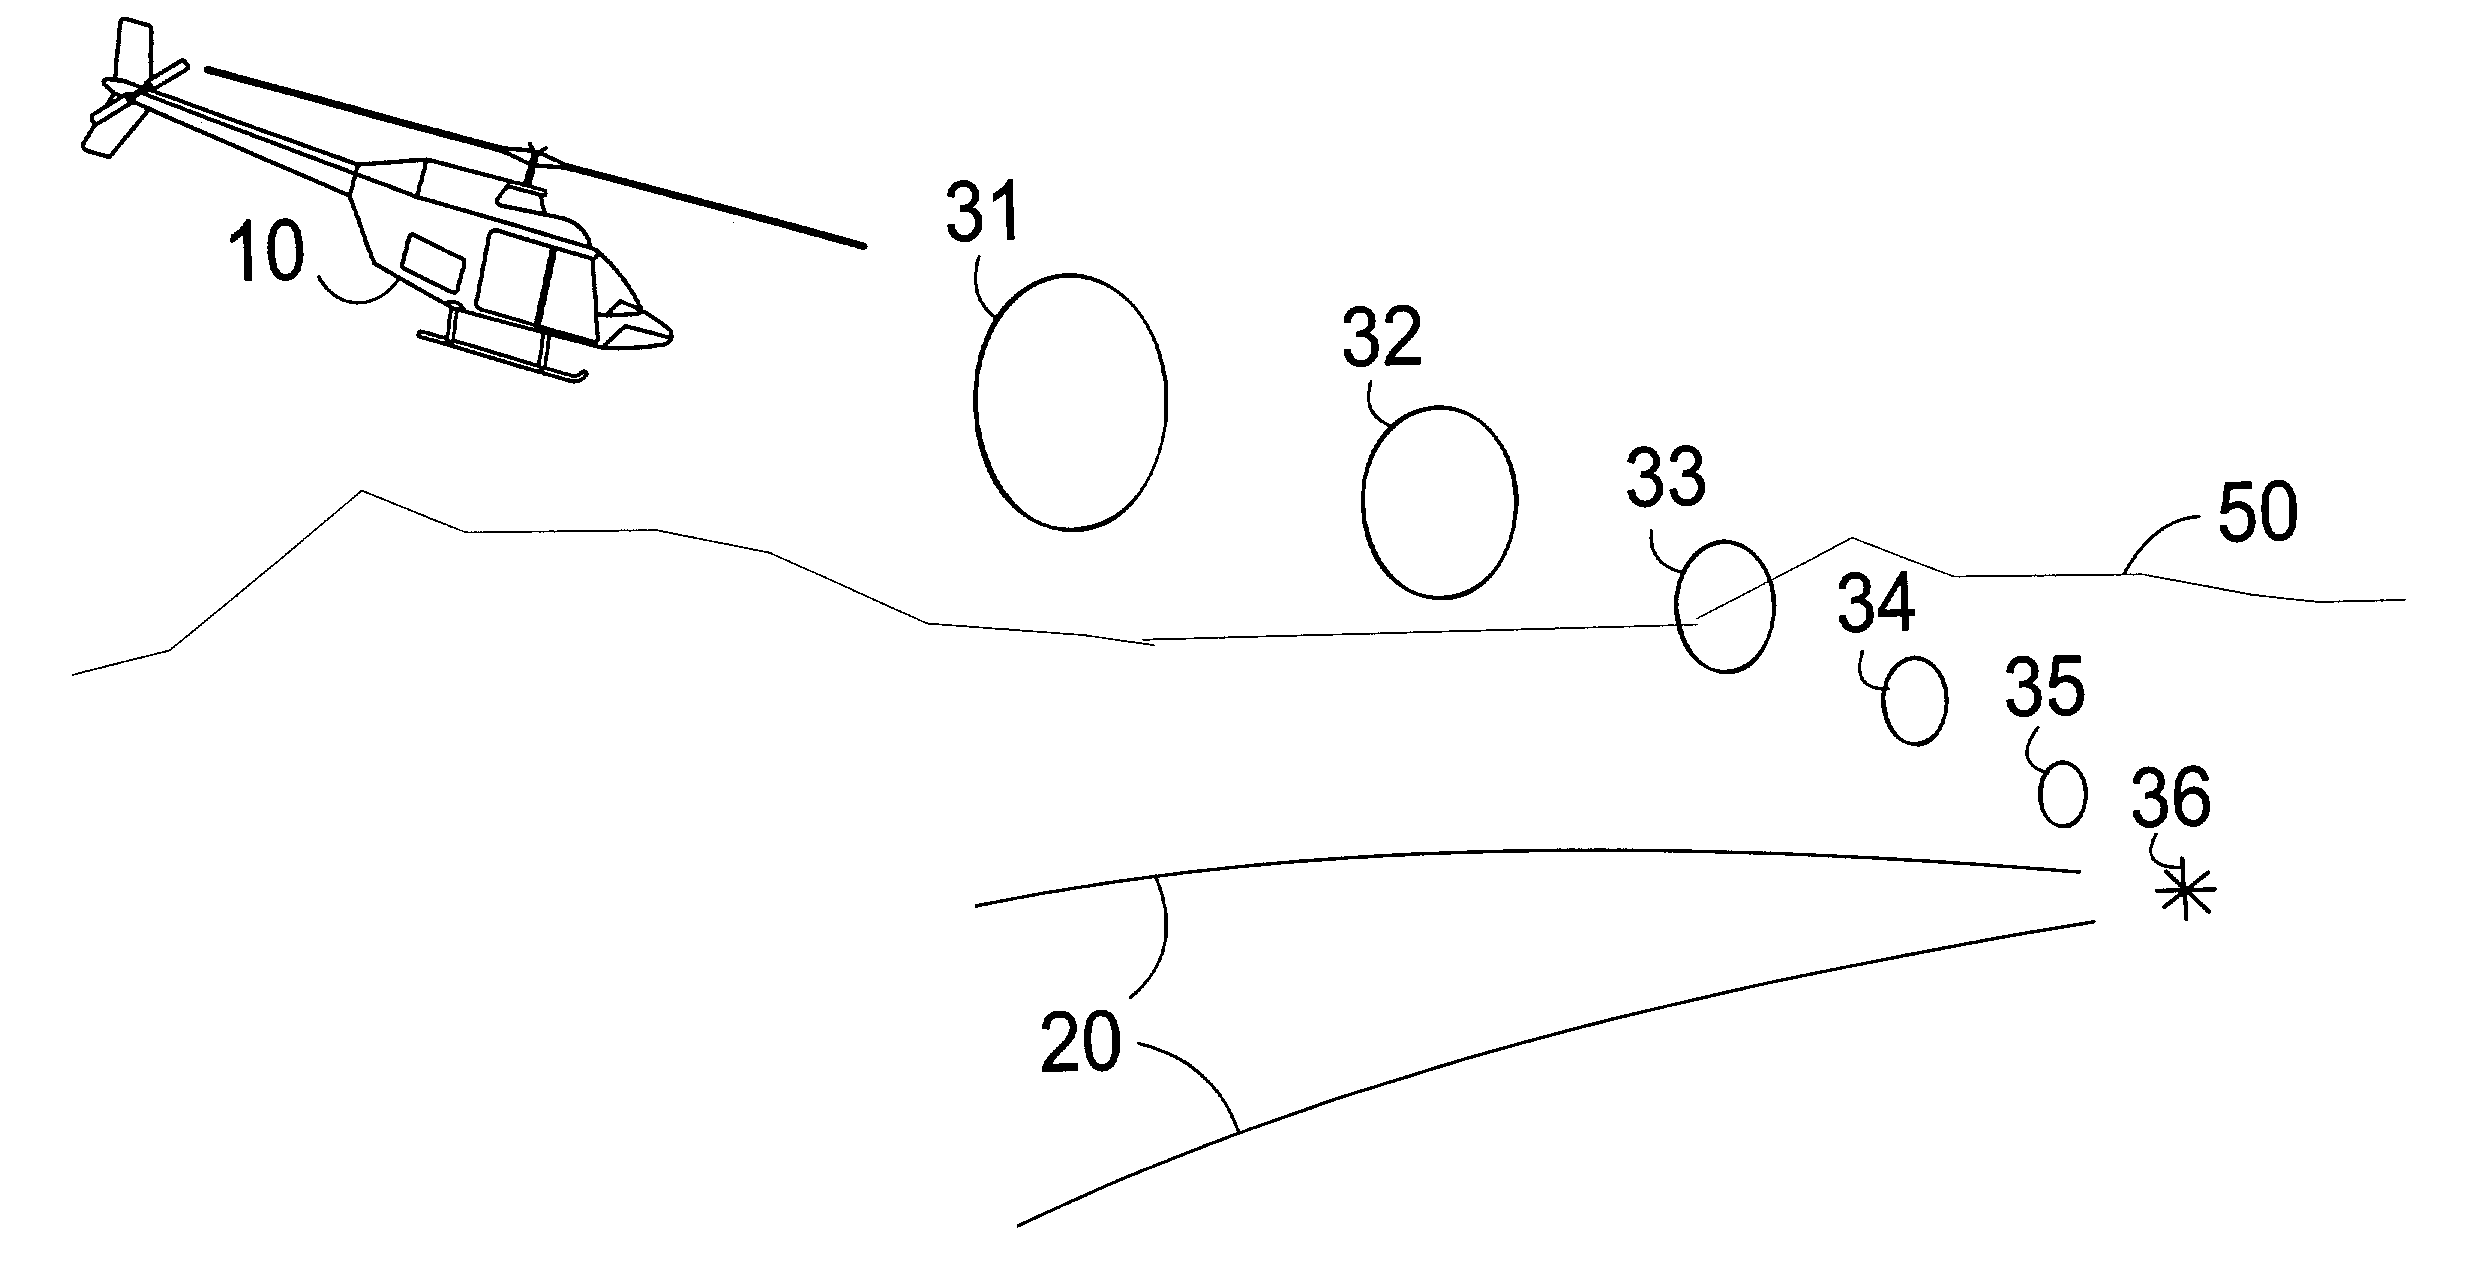 Aircraft future position and flight path indicator symbology